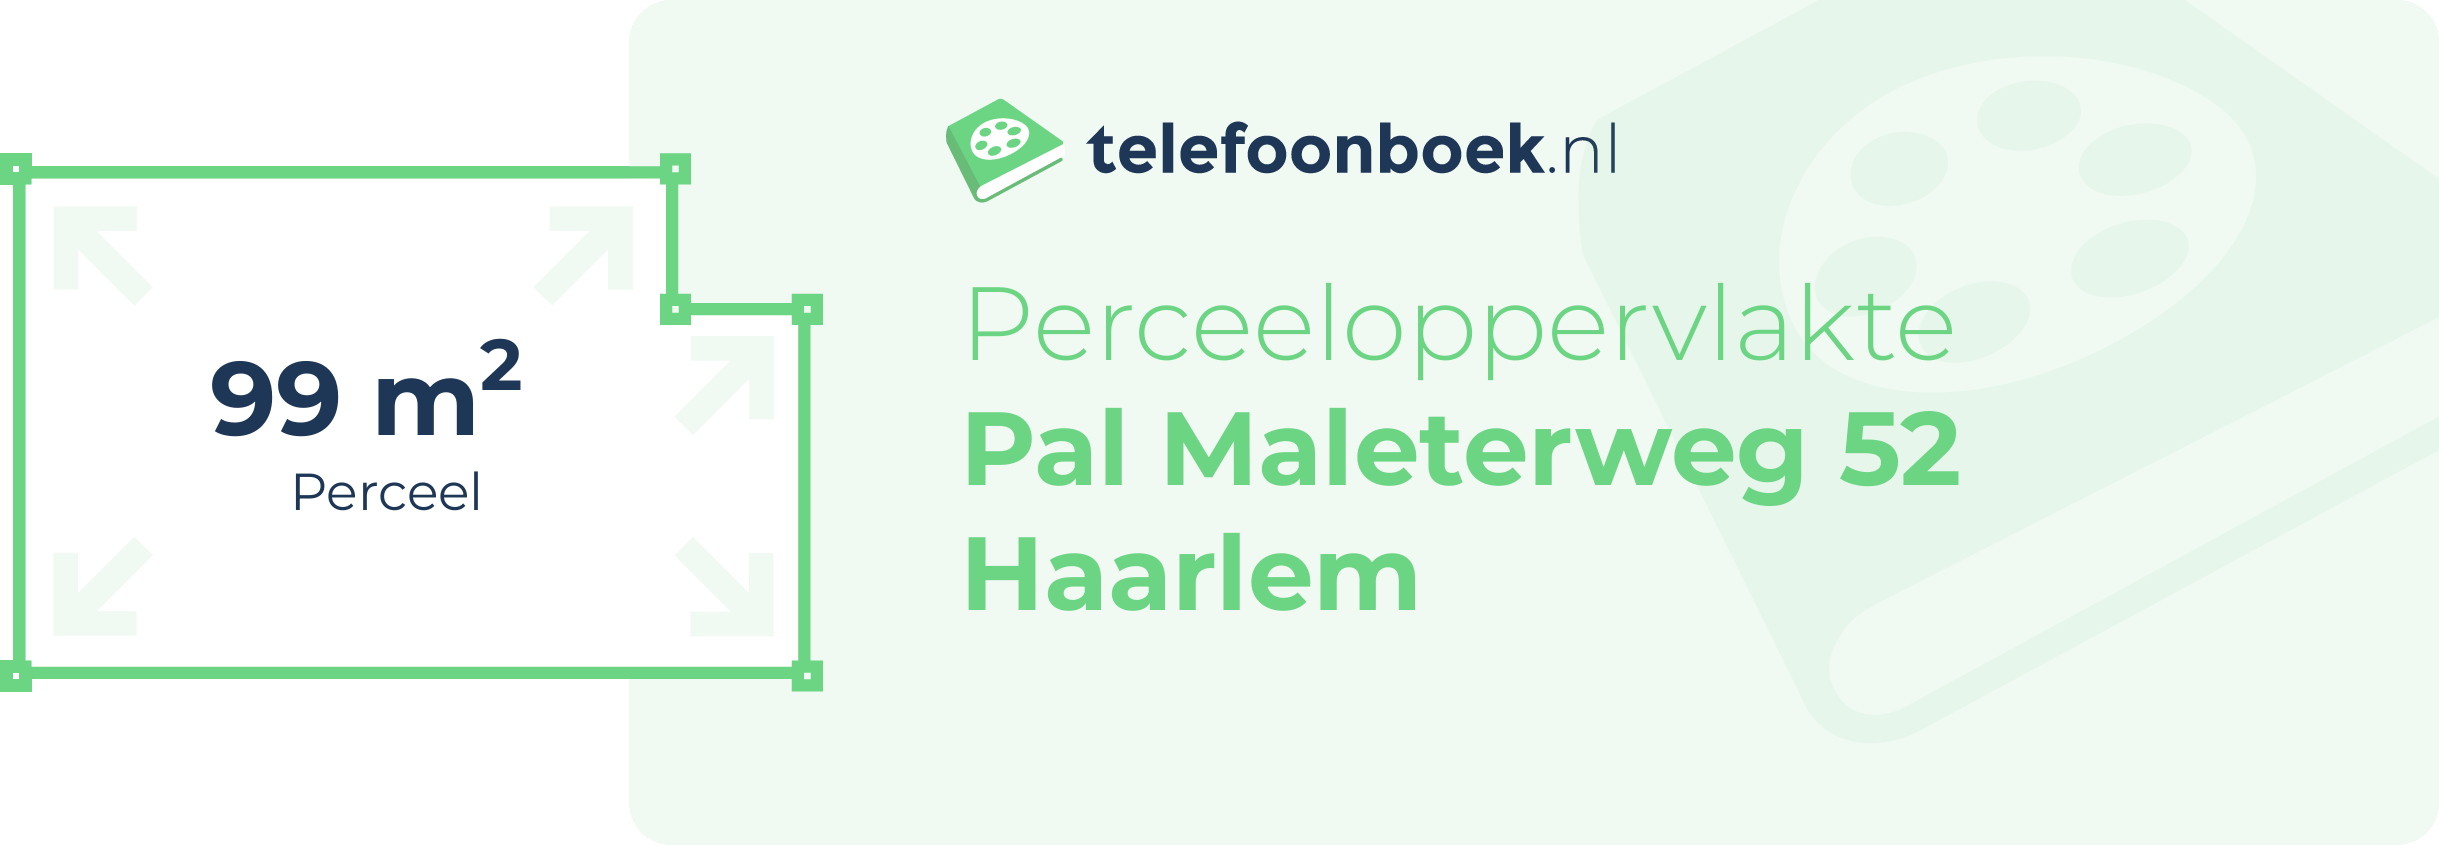 Perceeloppervlakte Pal Maleterweg 52 Haarlem